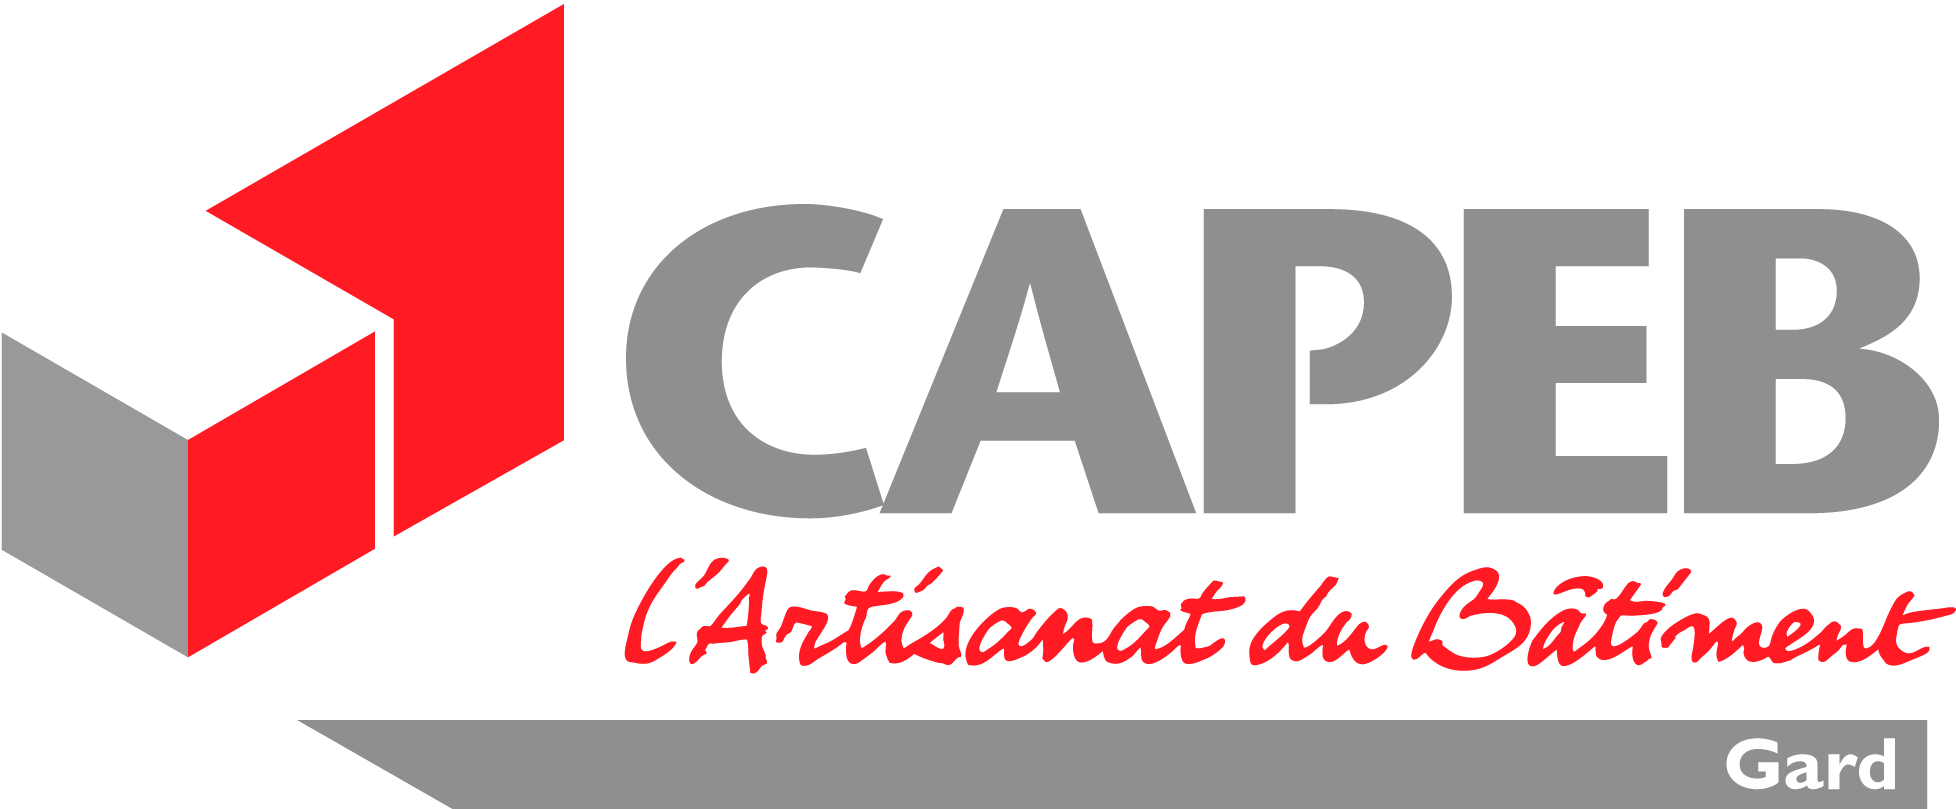 Soutenu par la CAPEB Gard